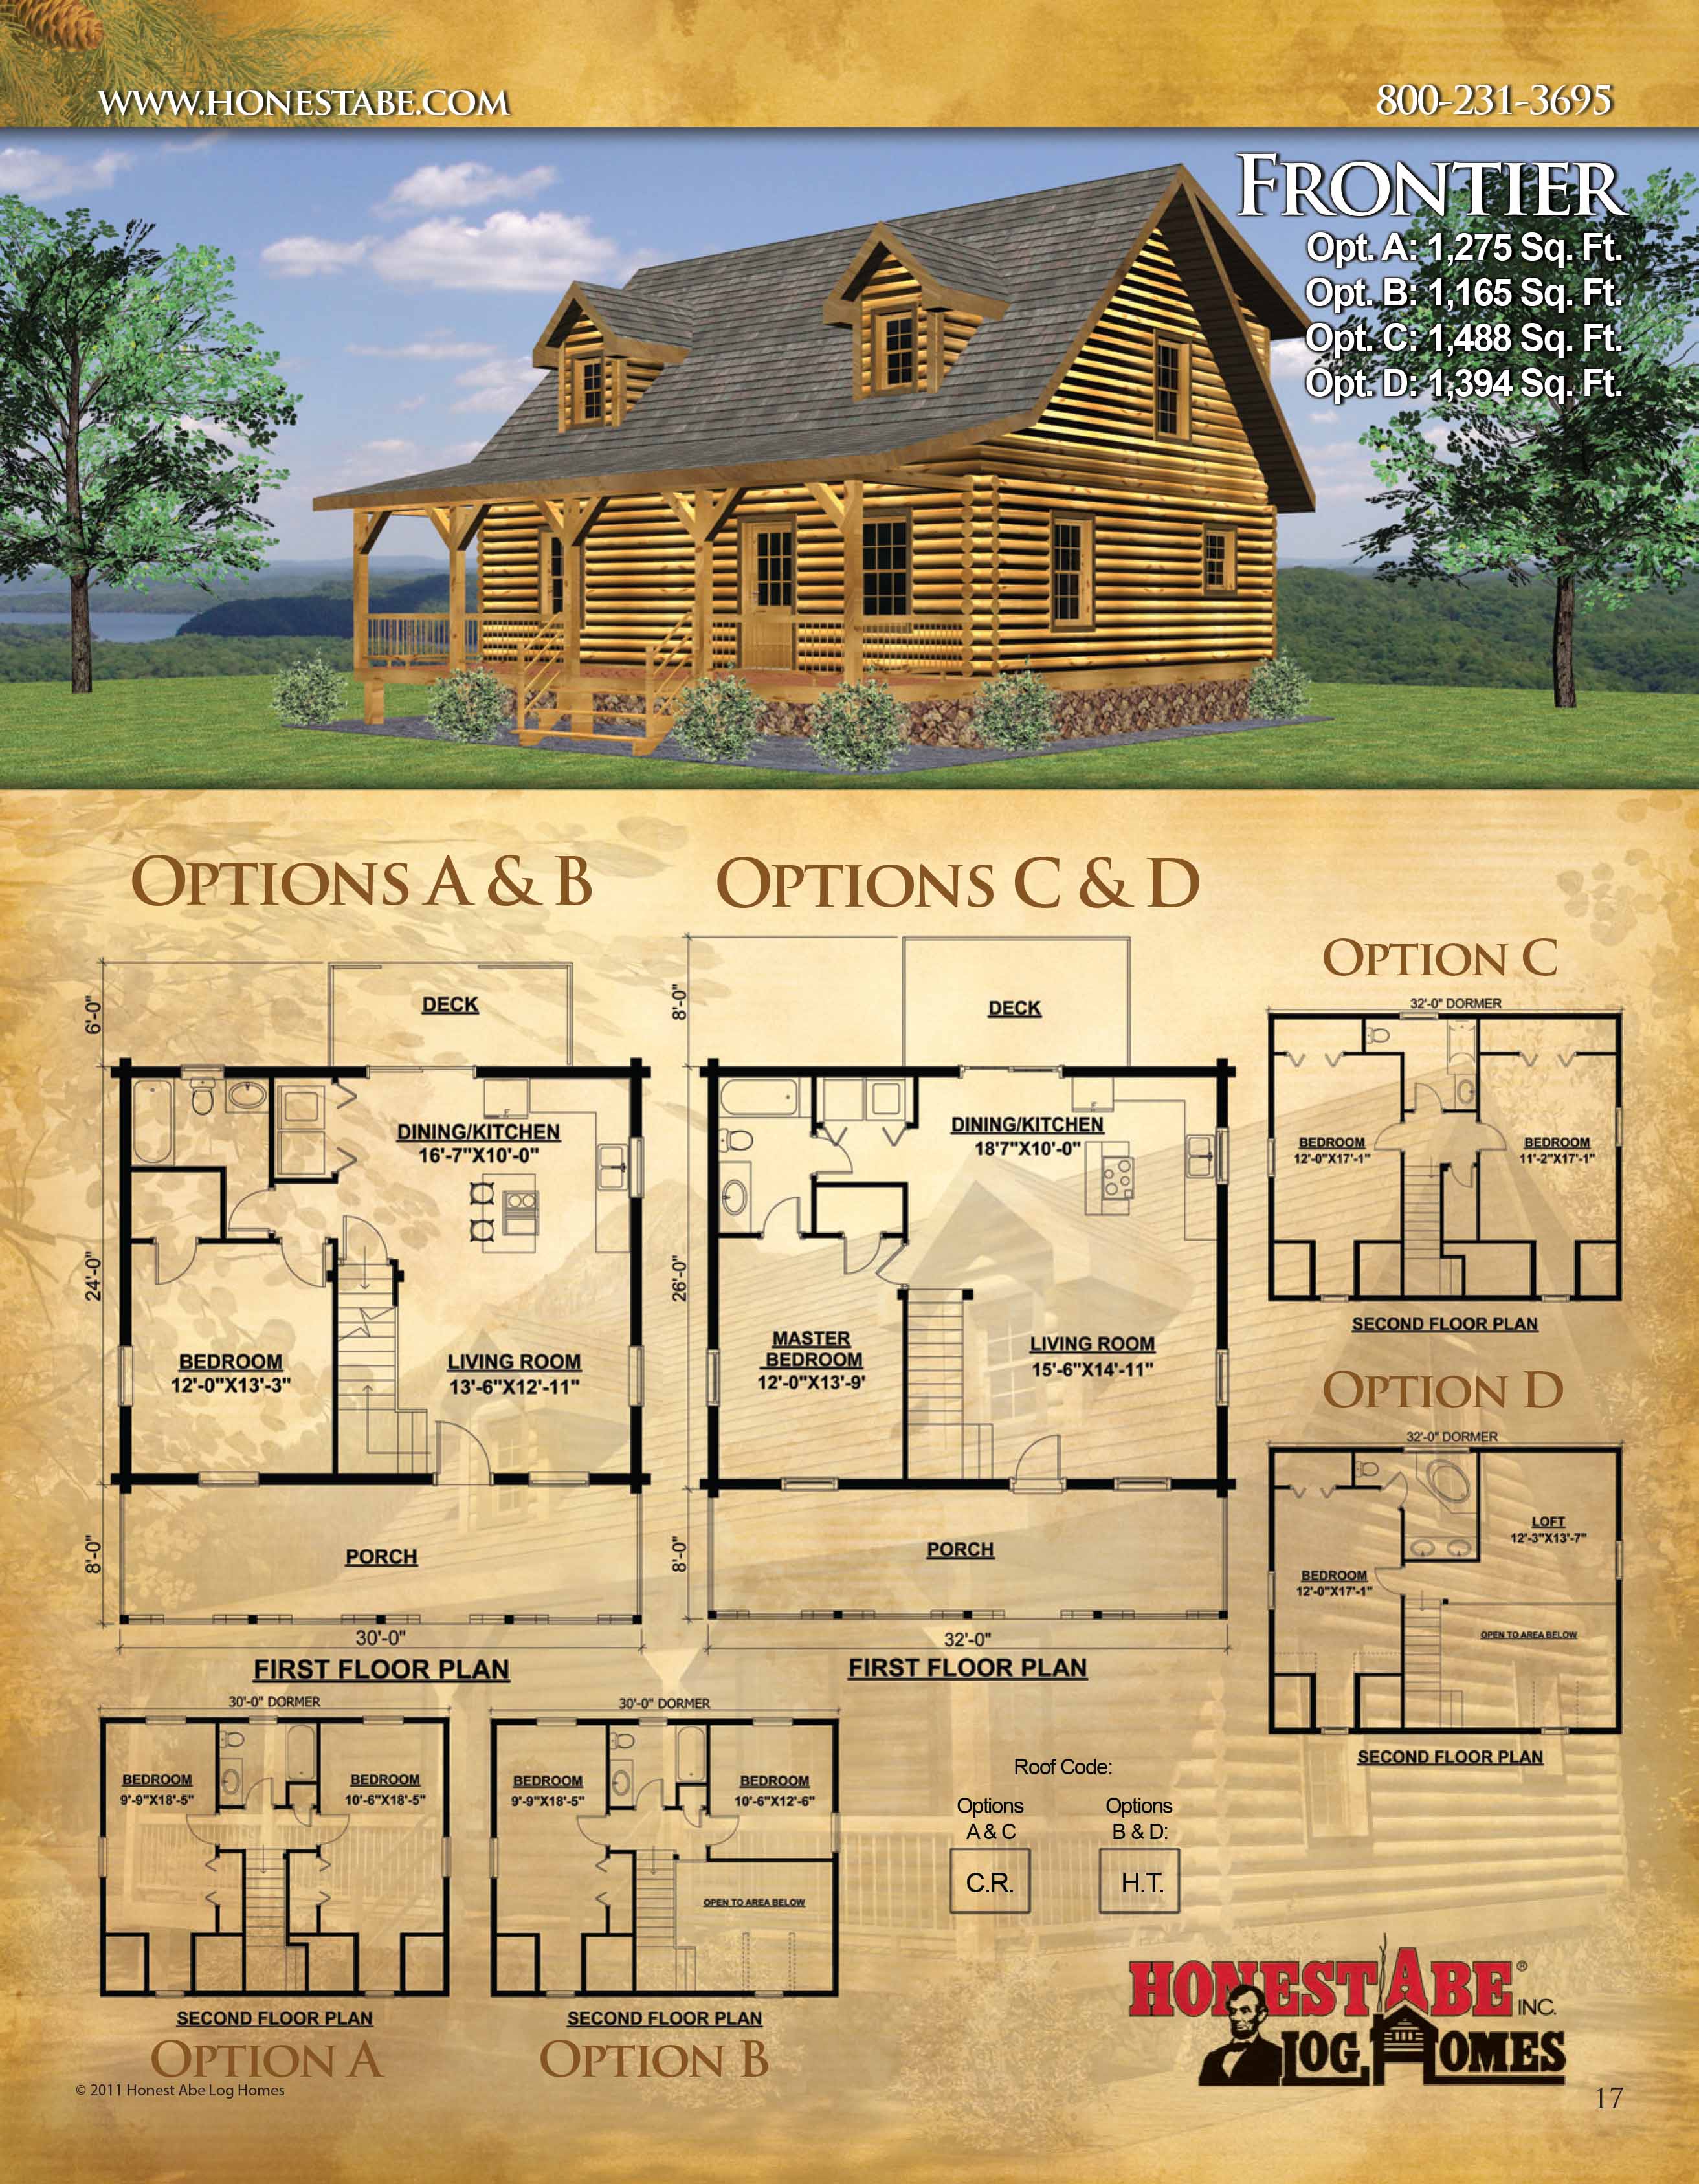 Cabin House Design Plans Image To U